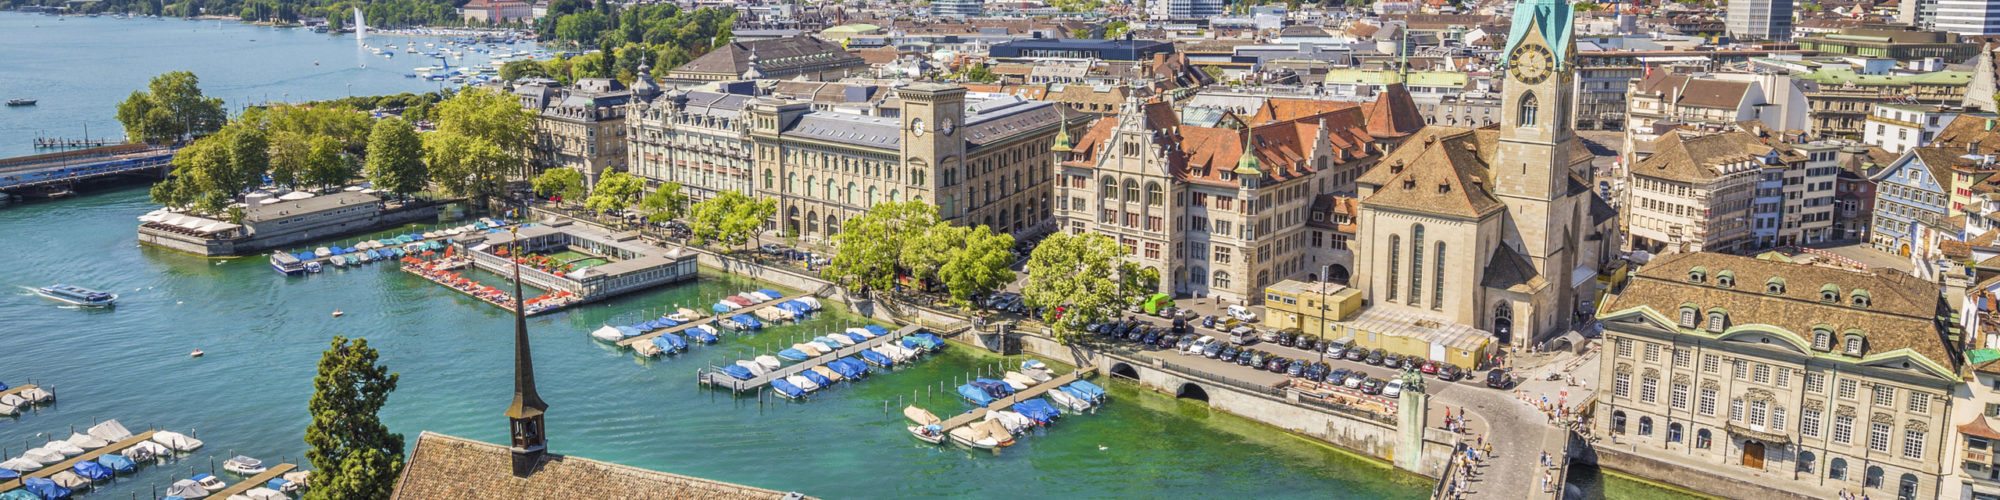 Zurich travel agents packages deals